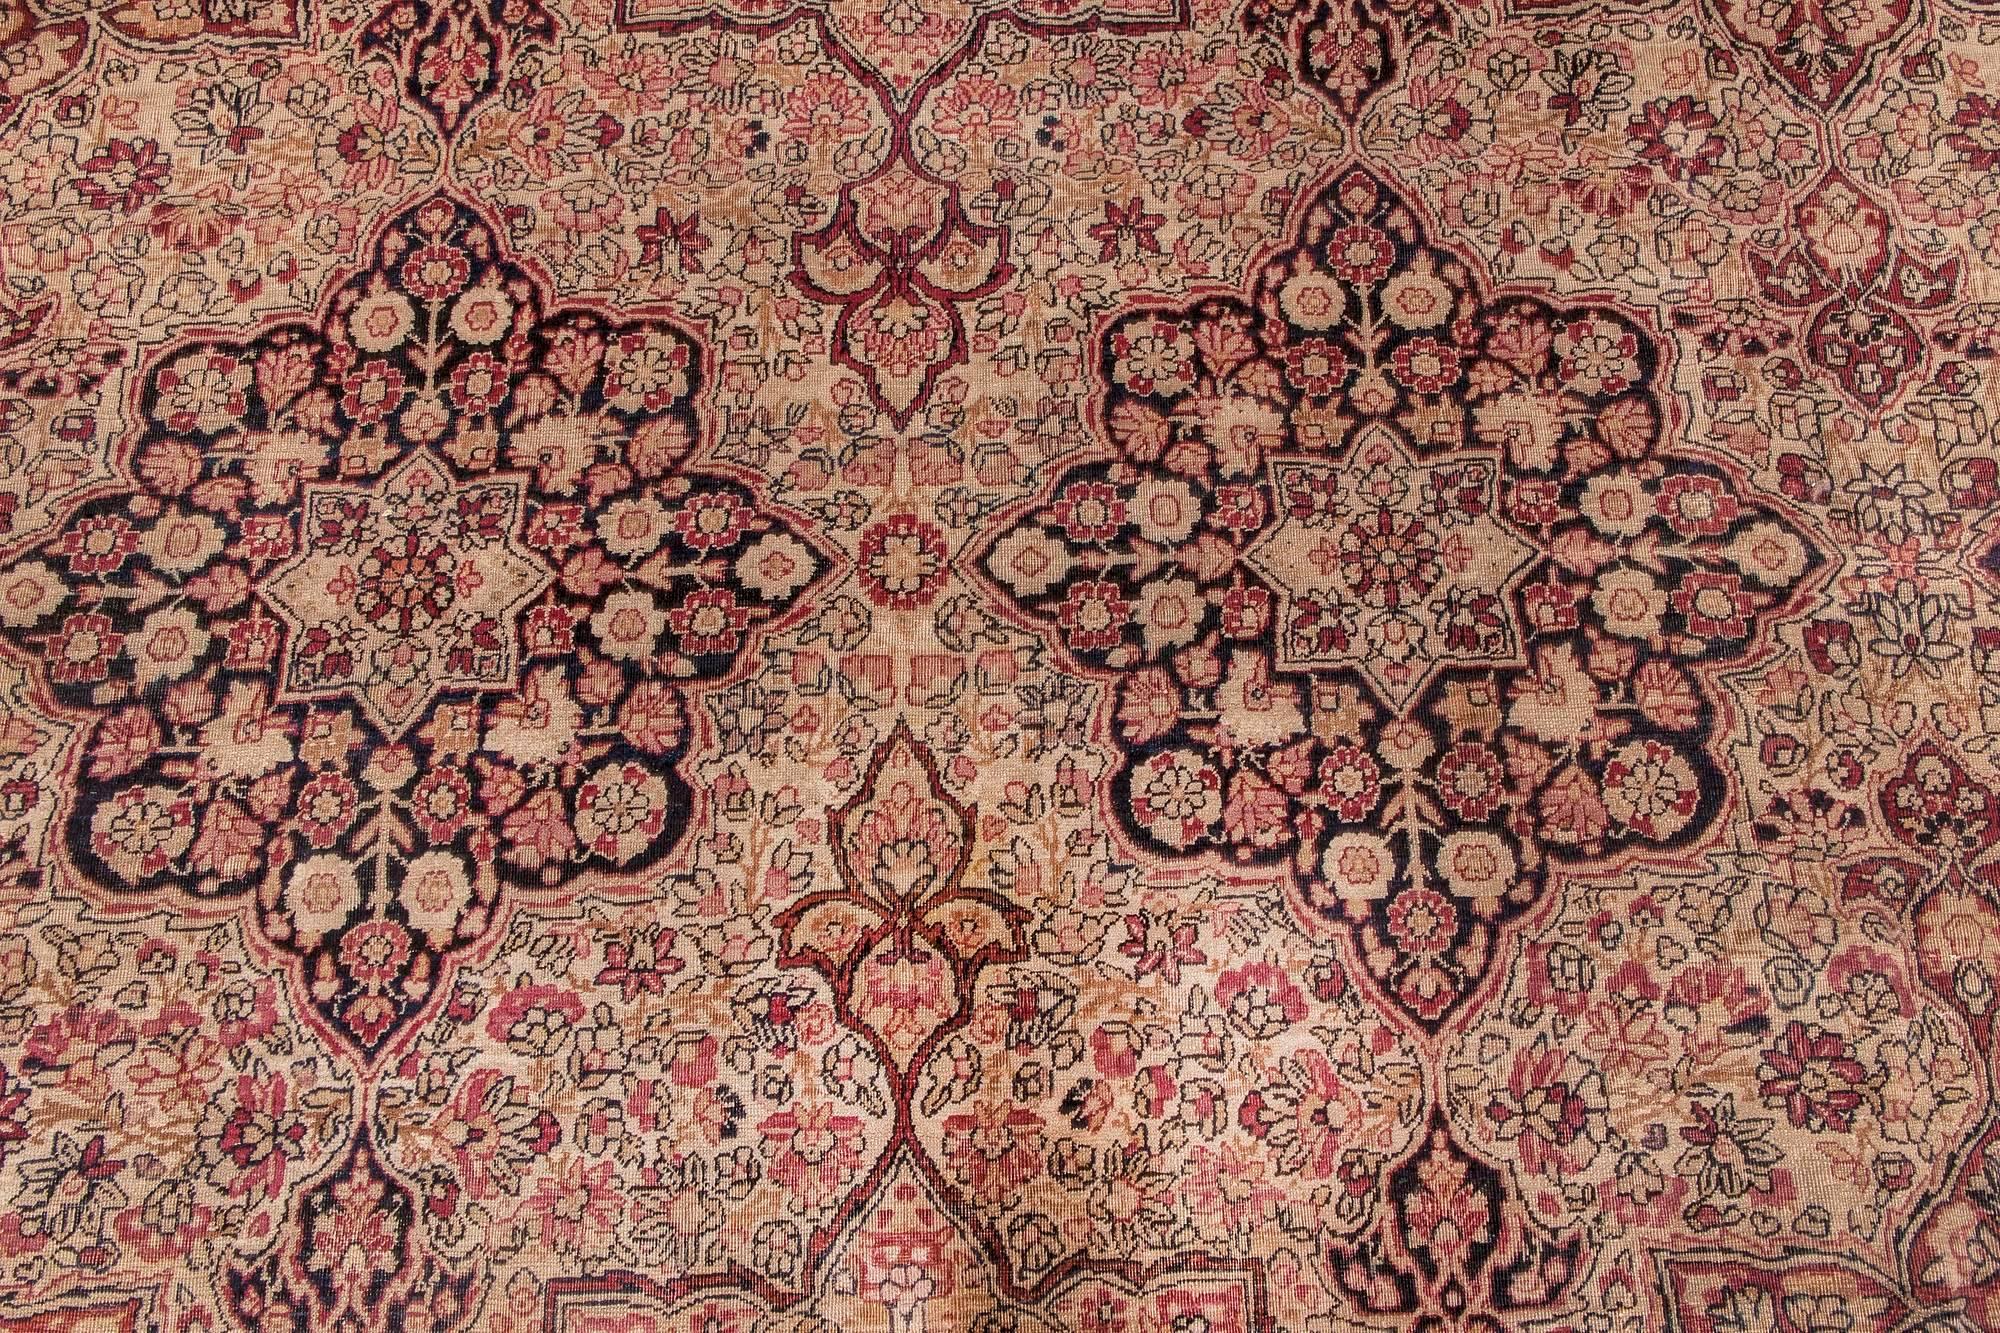 Authentic 19th Century Persian Kirman Botanic Handmade Wool Carpet by Doris Leslie Blau
Size: 12'8